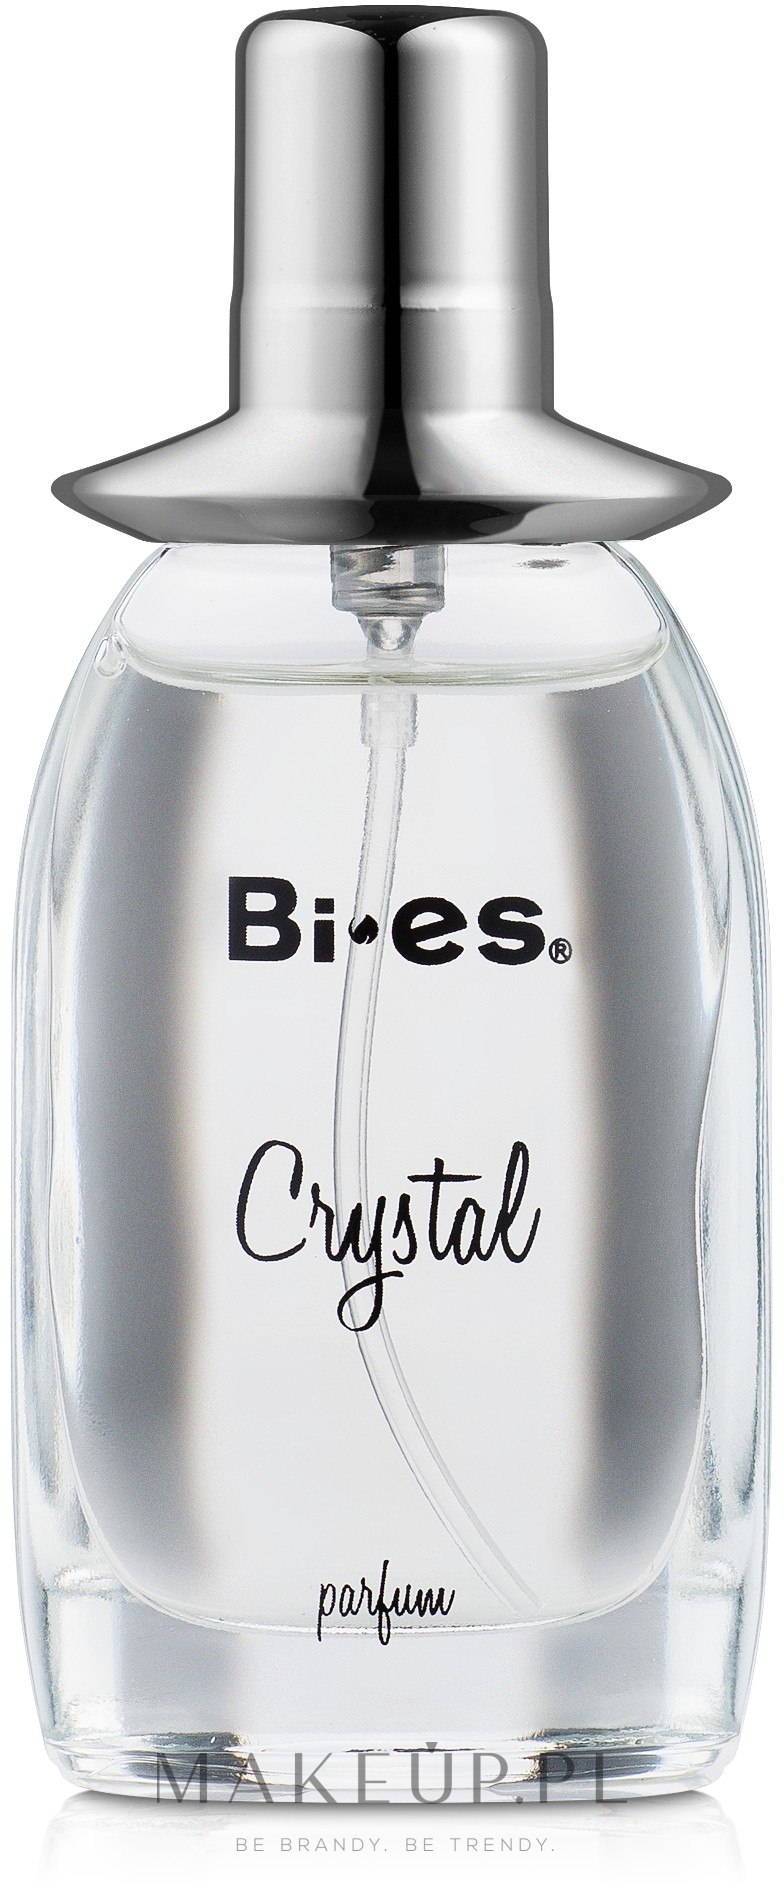 bi-es crystal for woman